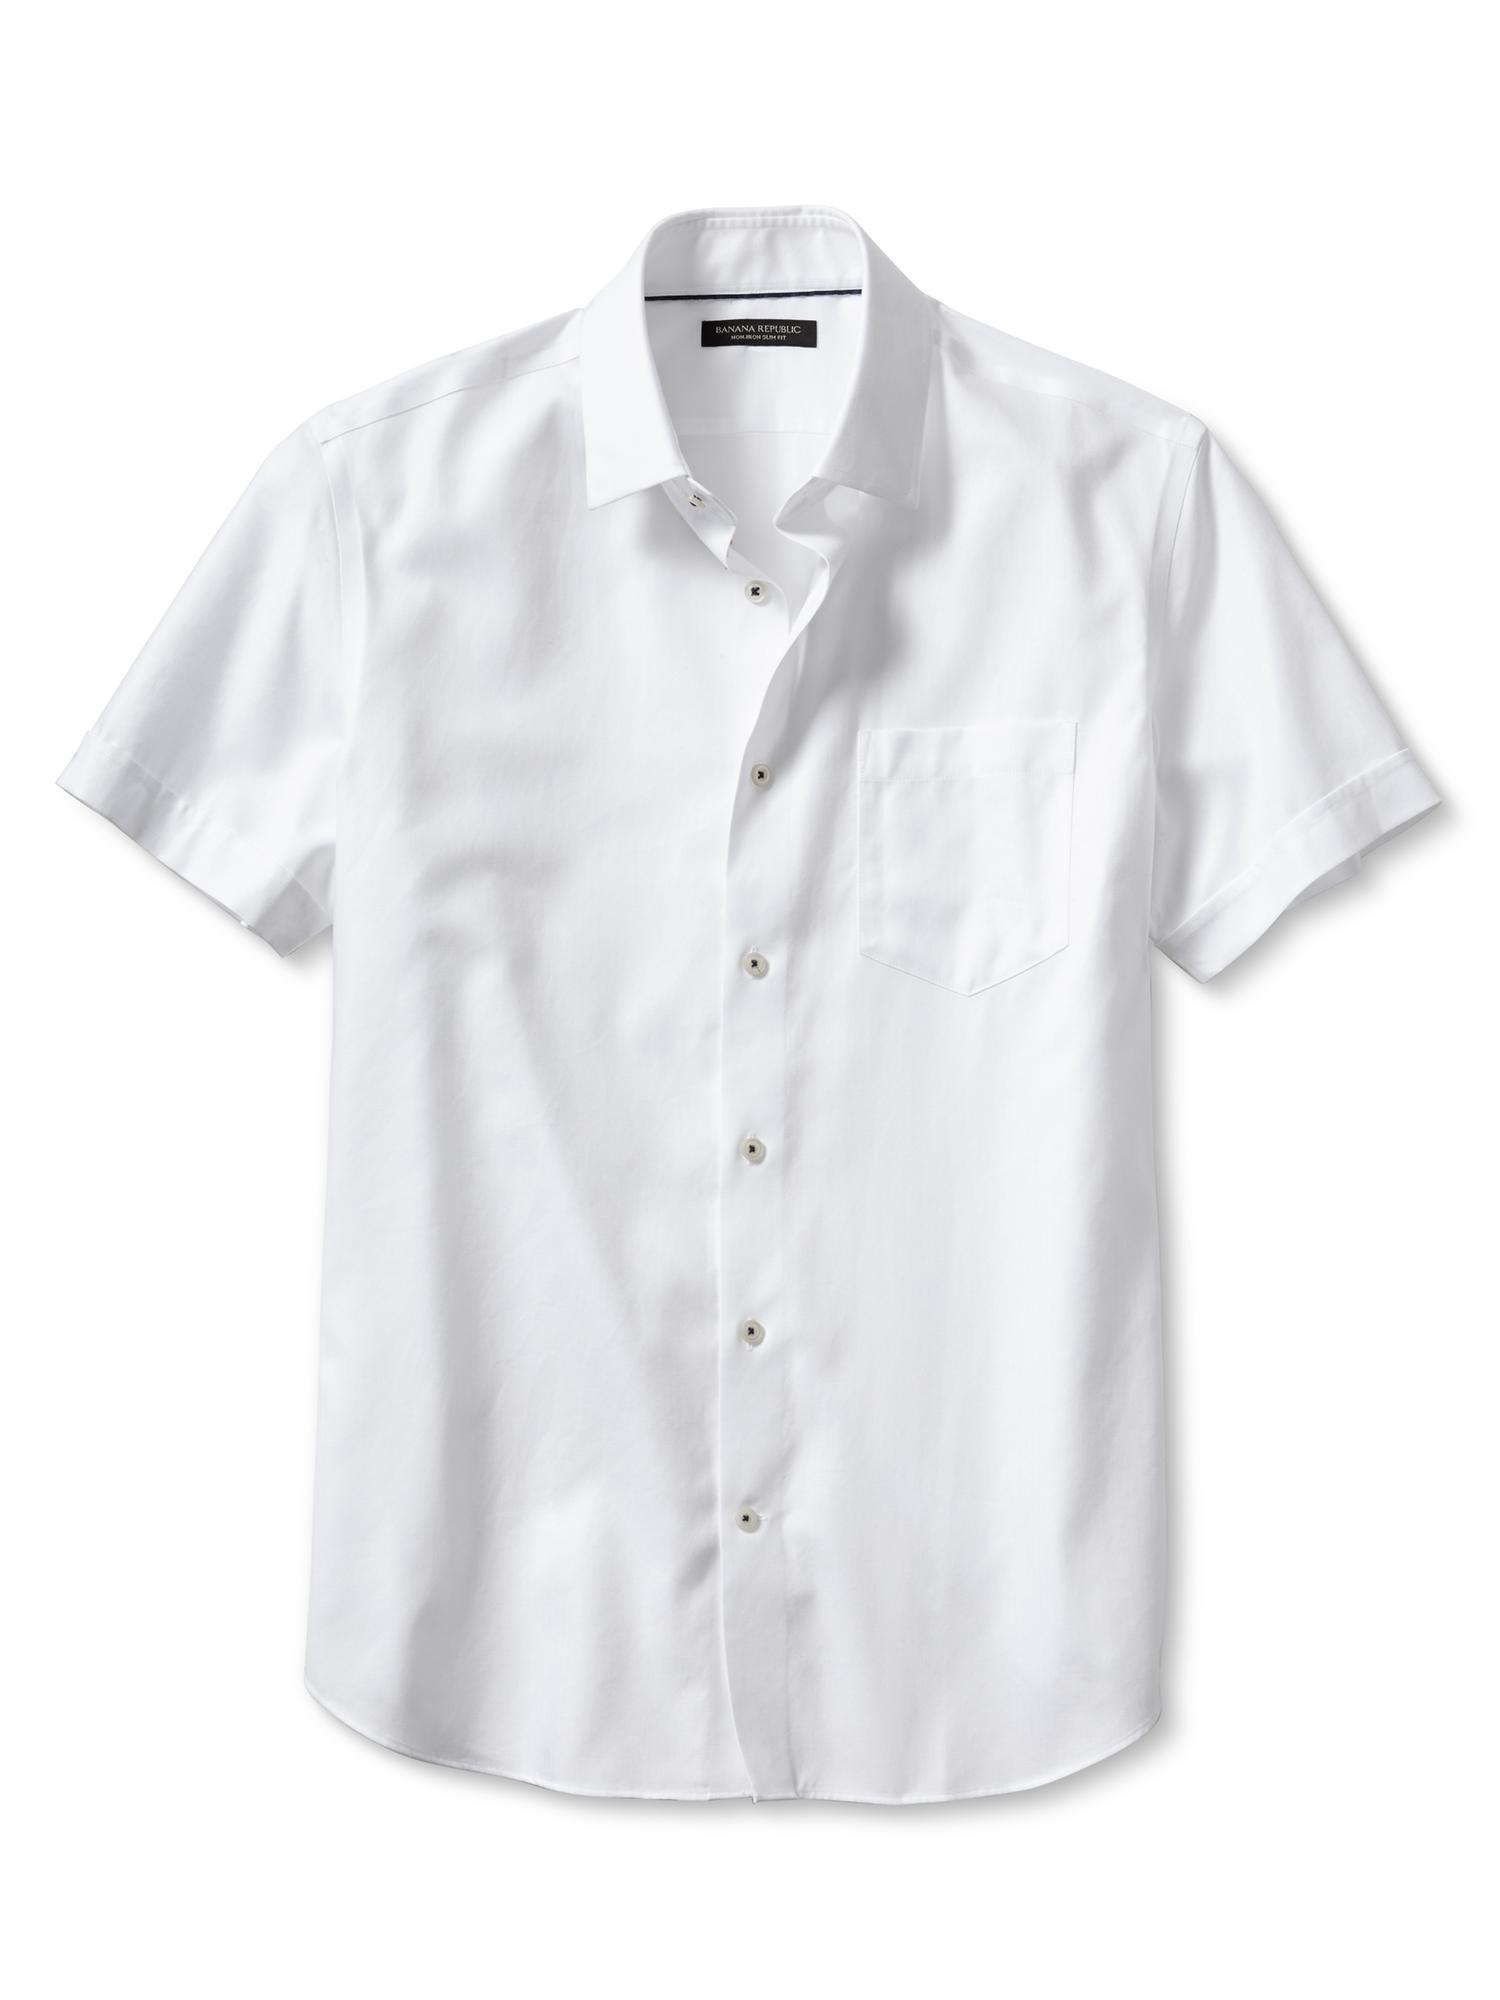 Banana republic Slim-fit Non-iron Short-sleeve Shirt in White for Men